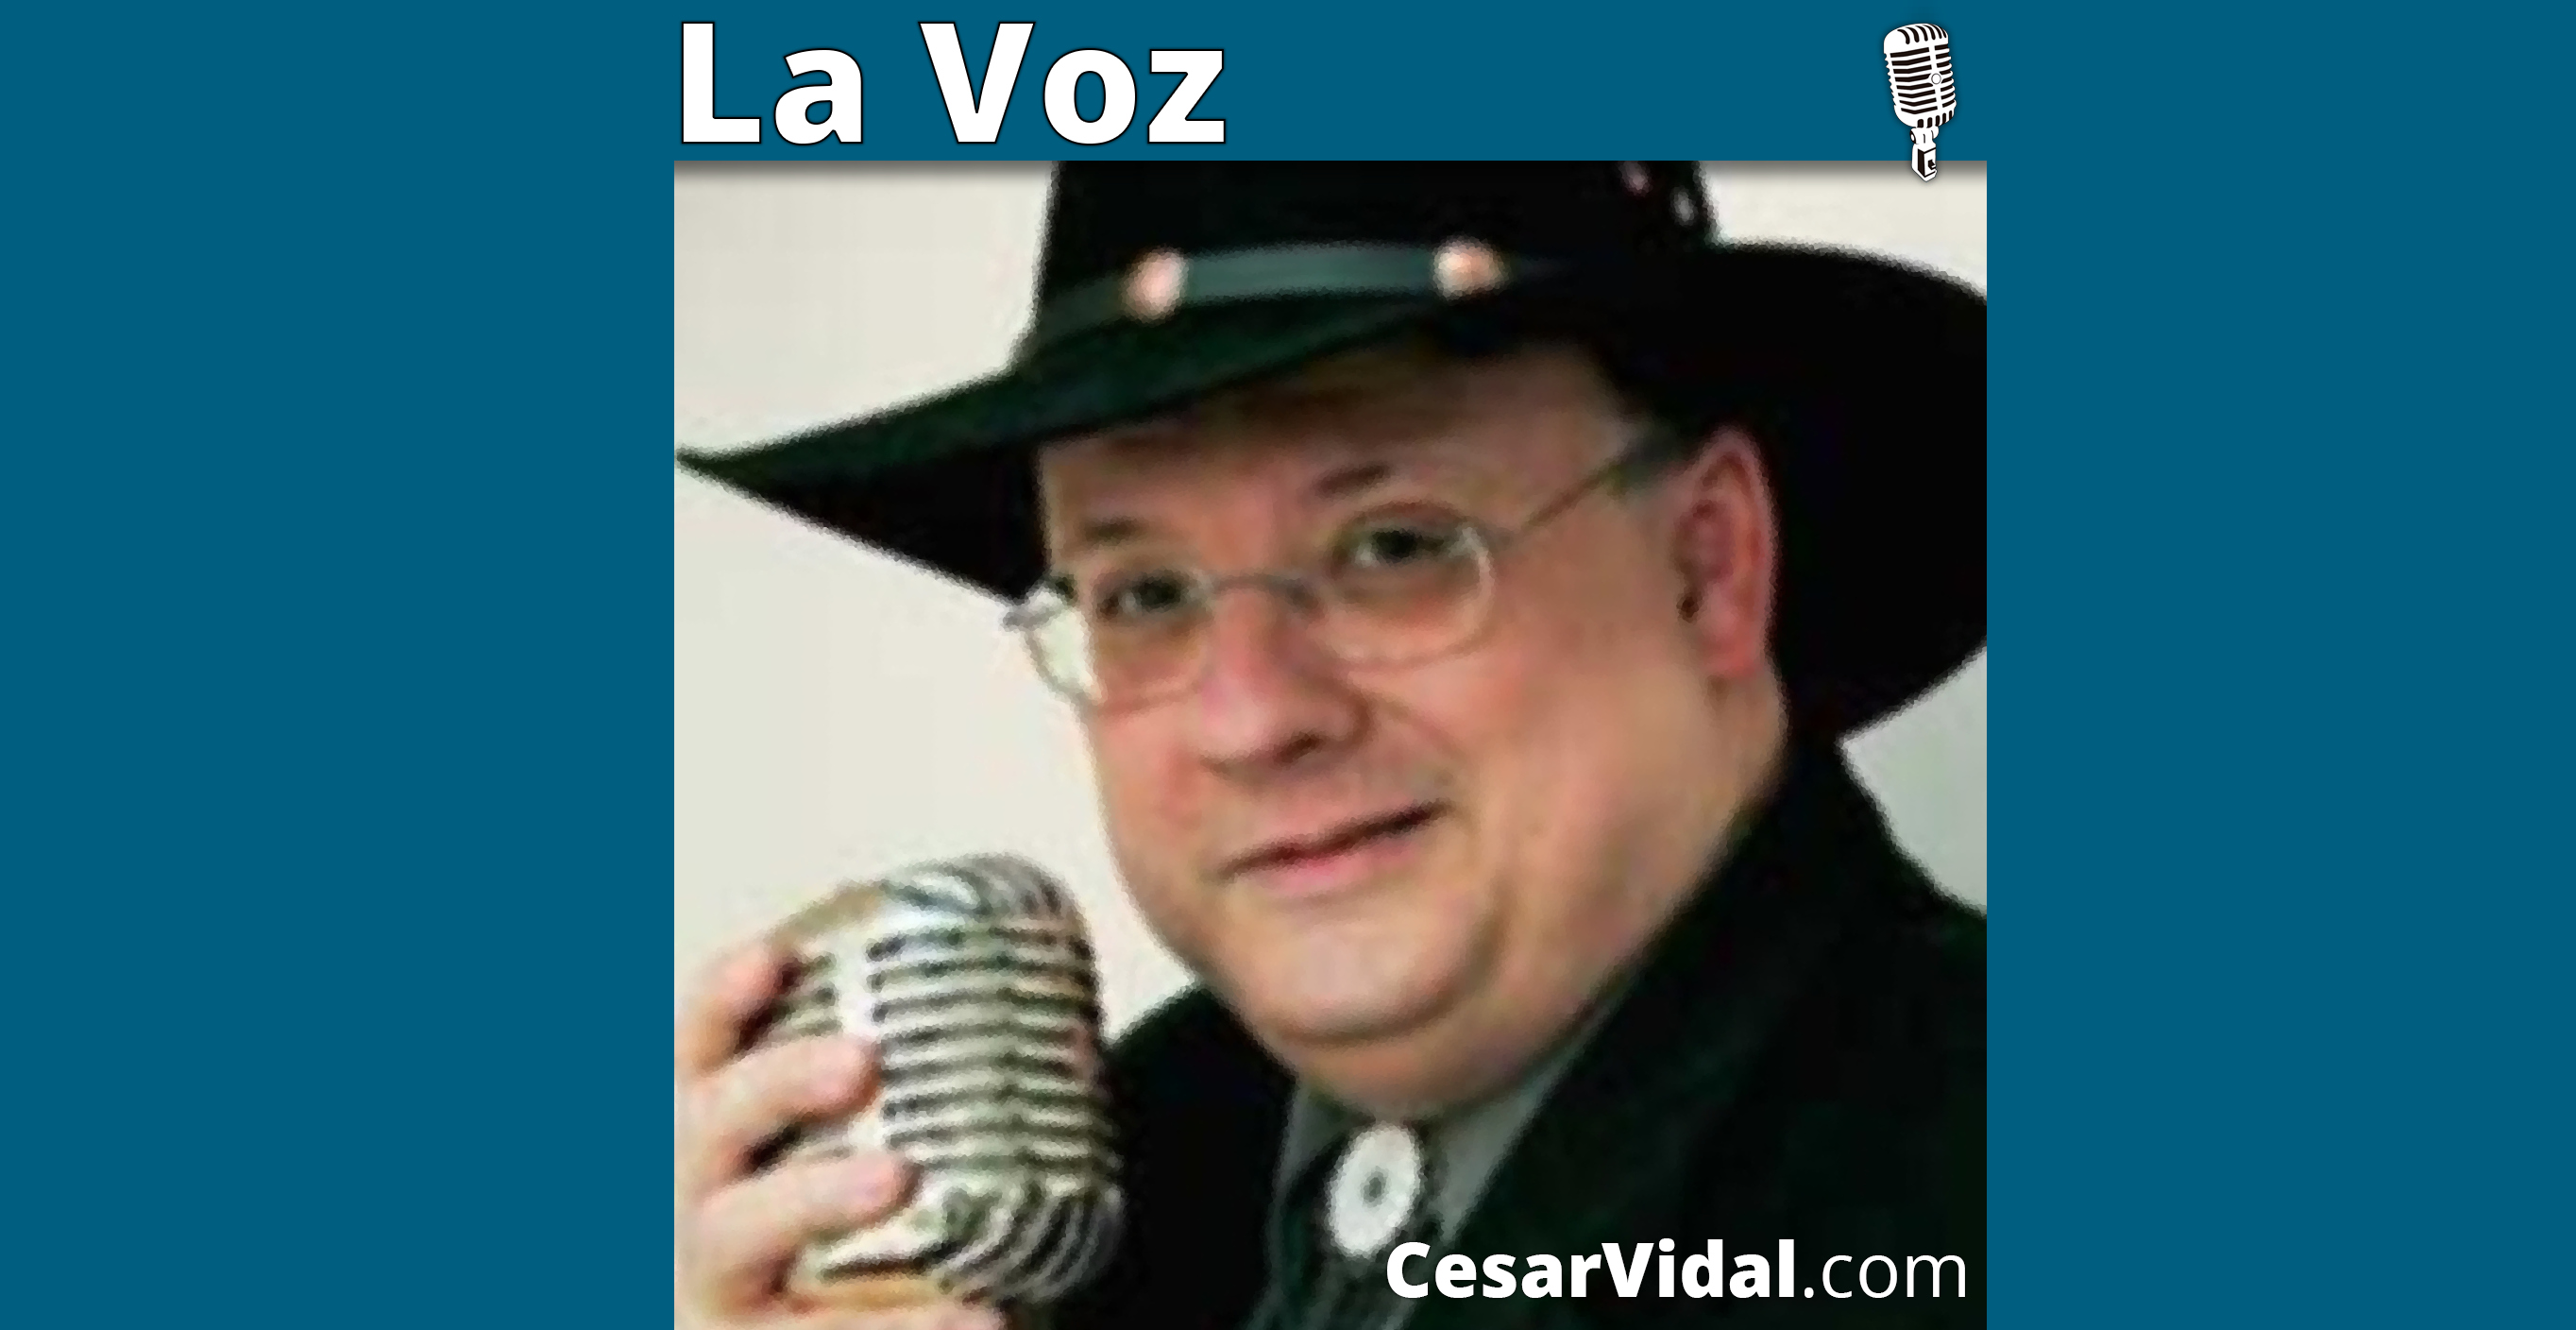 La Voz, Cesar Vidal